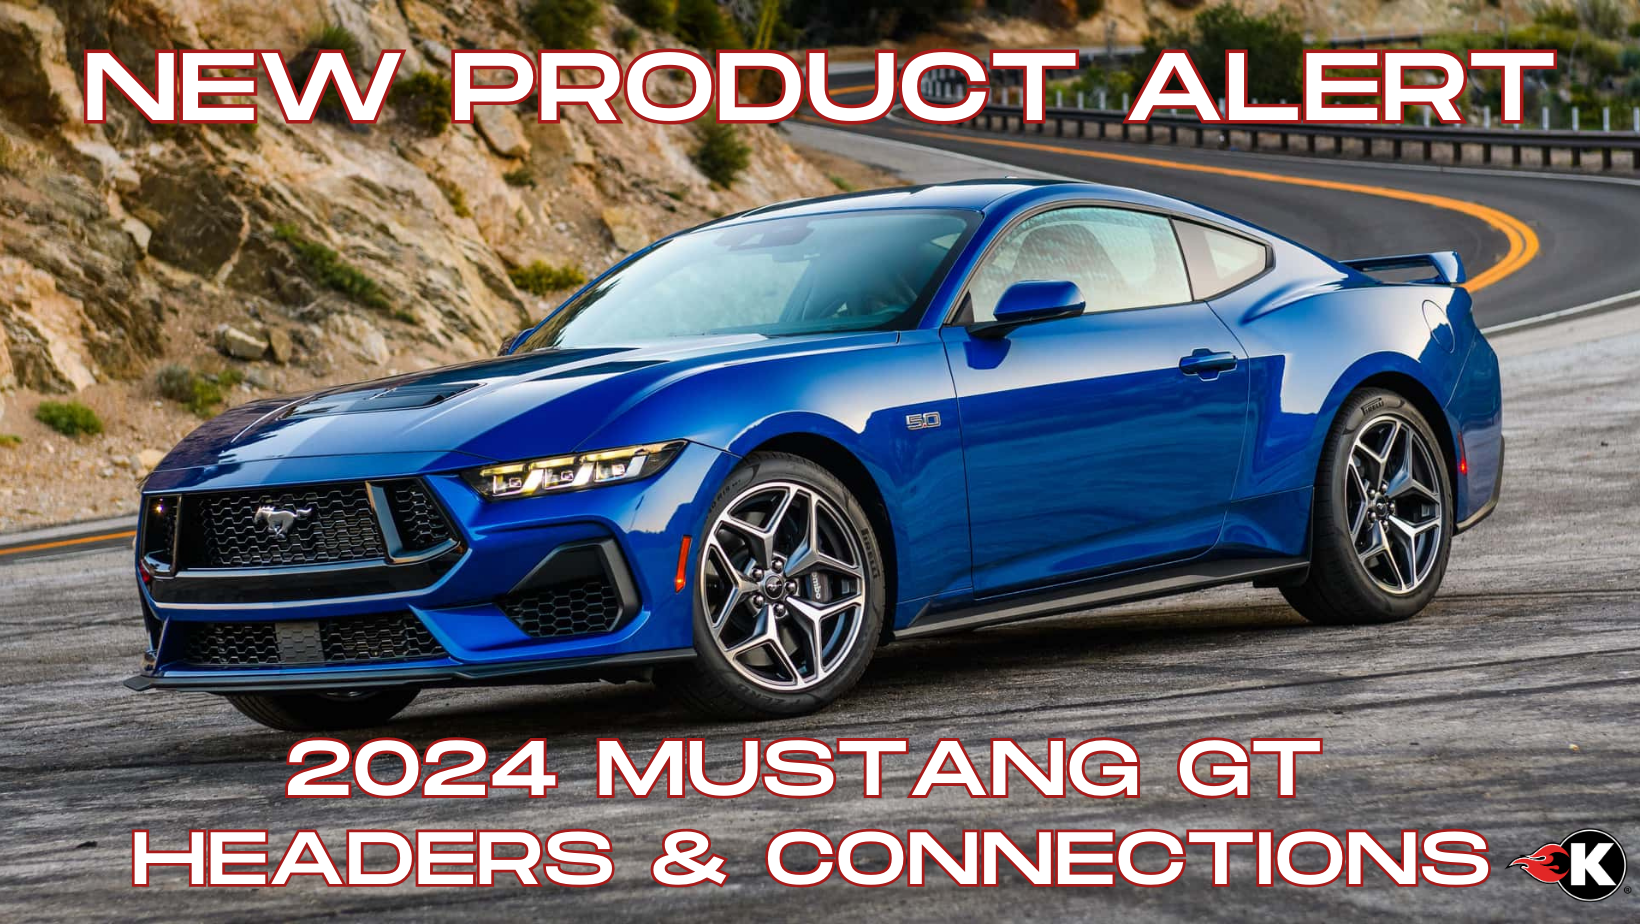 S650 Mustang 2024 Mustang GT KOOKS headers AVAILABLE @Beefcake Racing!!! WFjU.&owa=outlook.office.com&scriptVer=20230907065